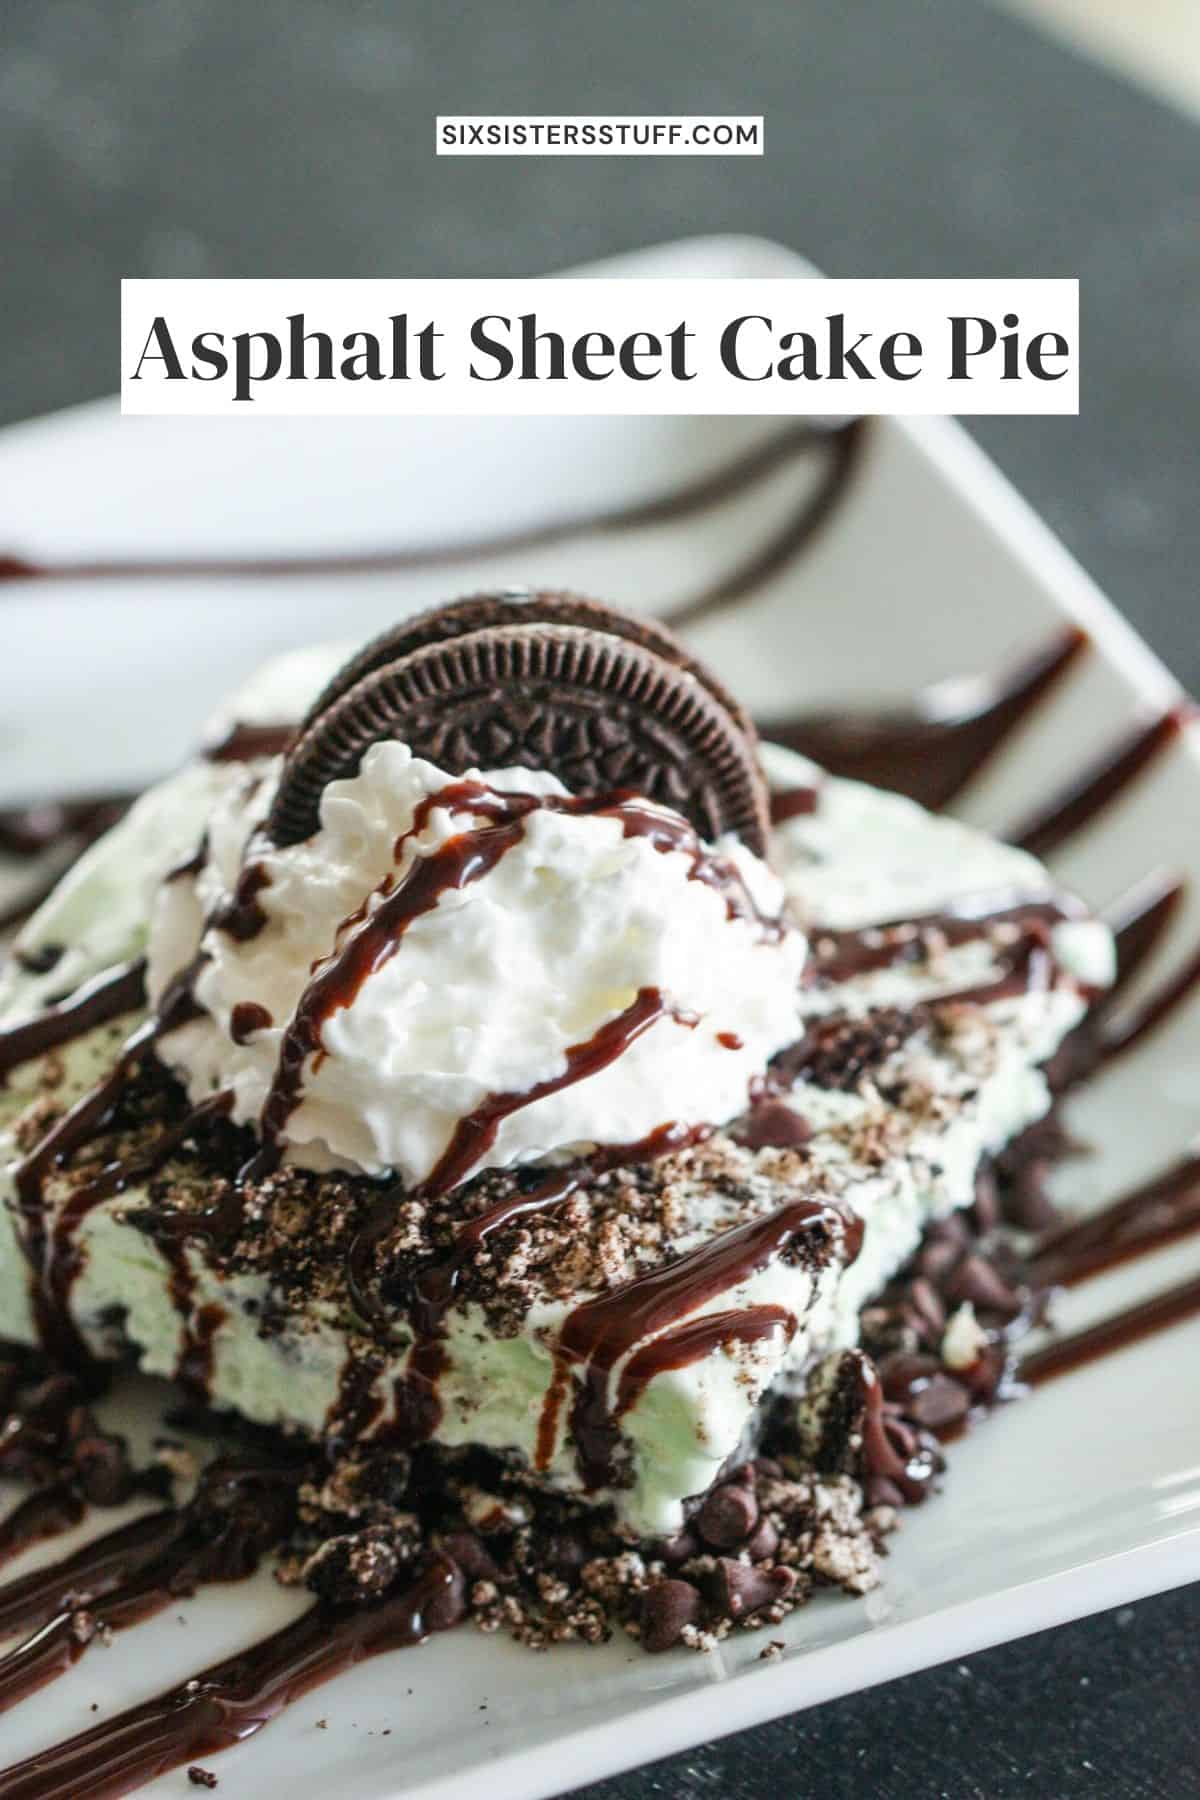 Asphalt Sheet Cake Pie Recipe - Six Sisters' Stuff